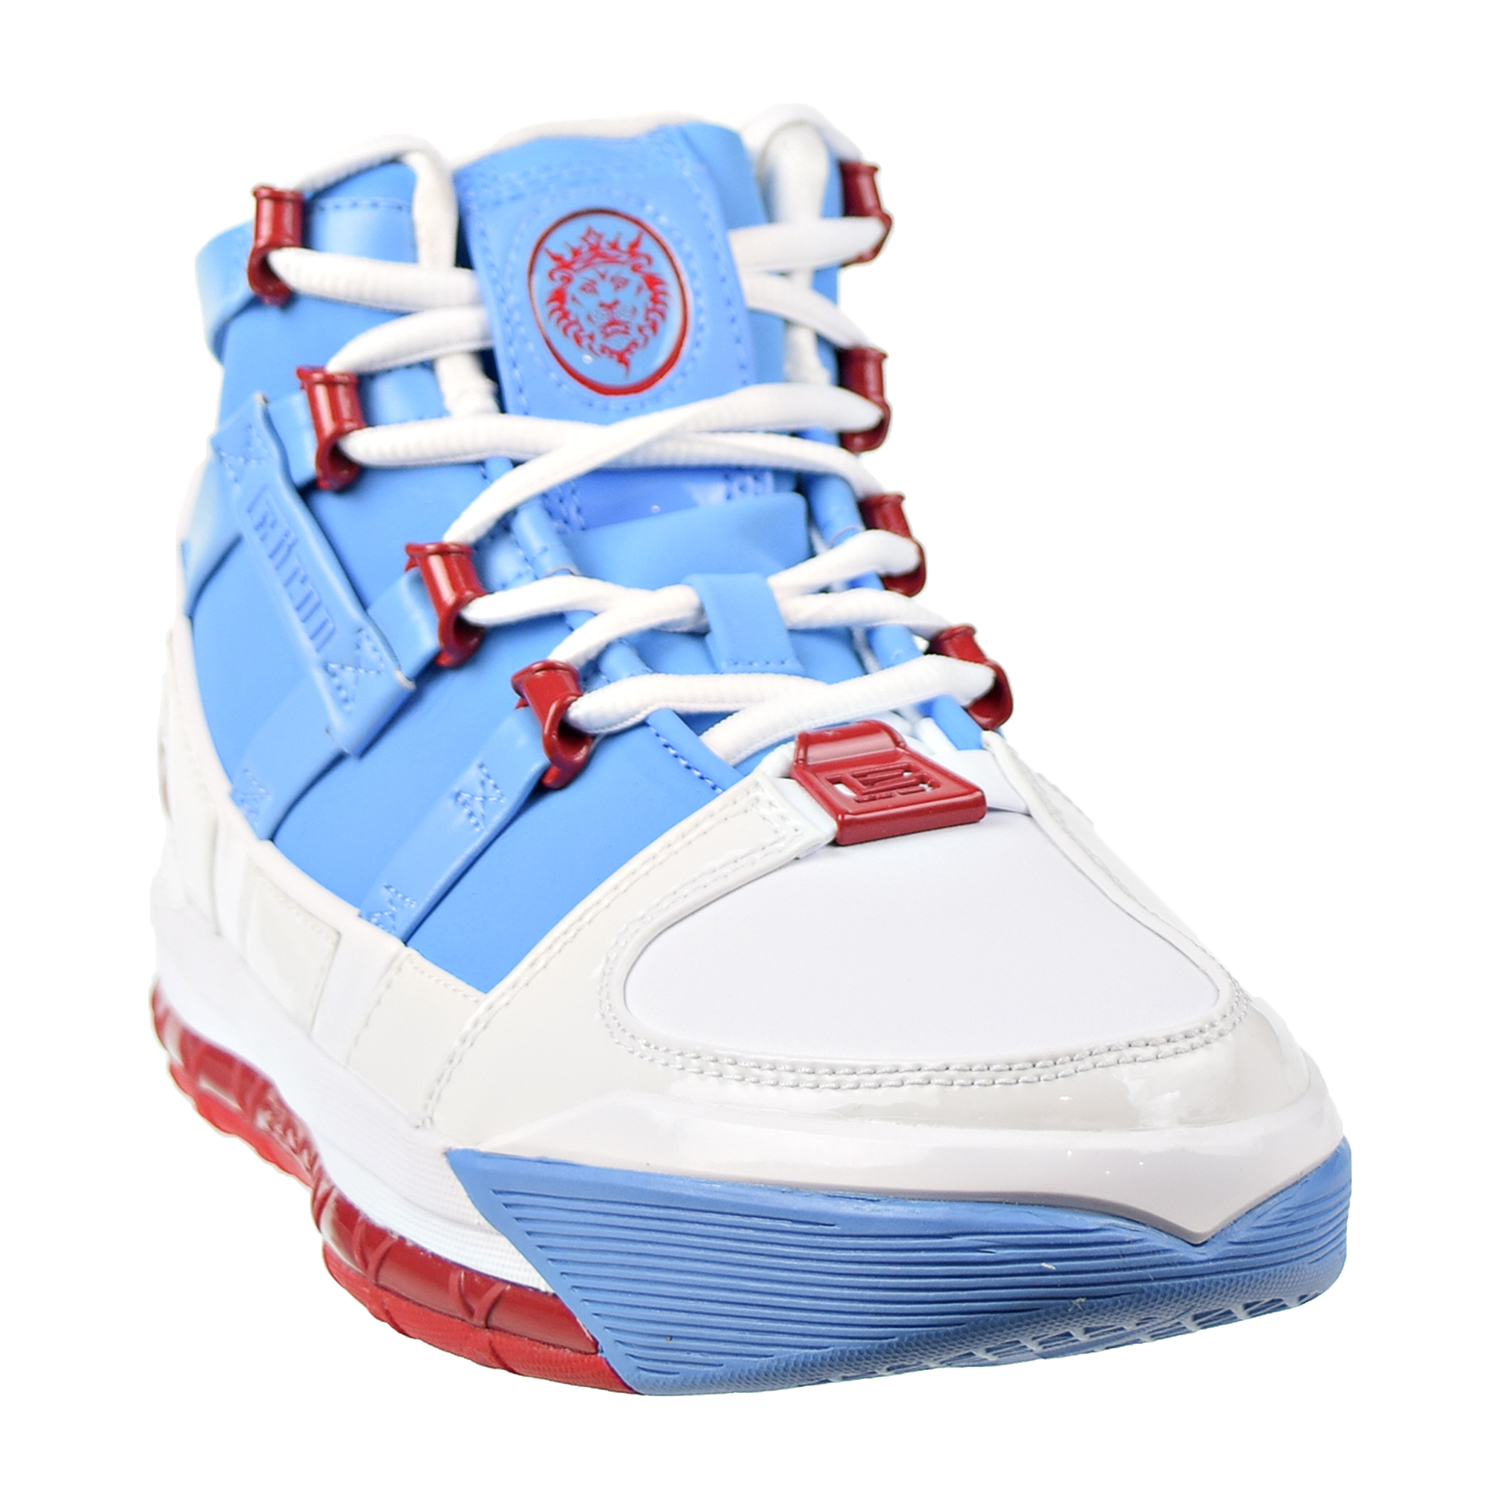 Nike Zoom Lebron III QS "Houston Oilers" Men's Shoes University Blue/Red ao2434-400 - image 2 of 6